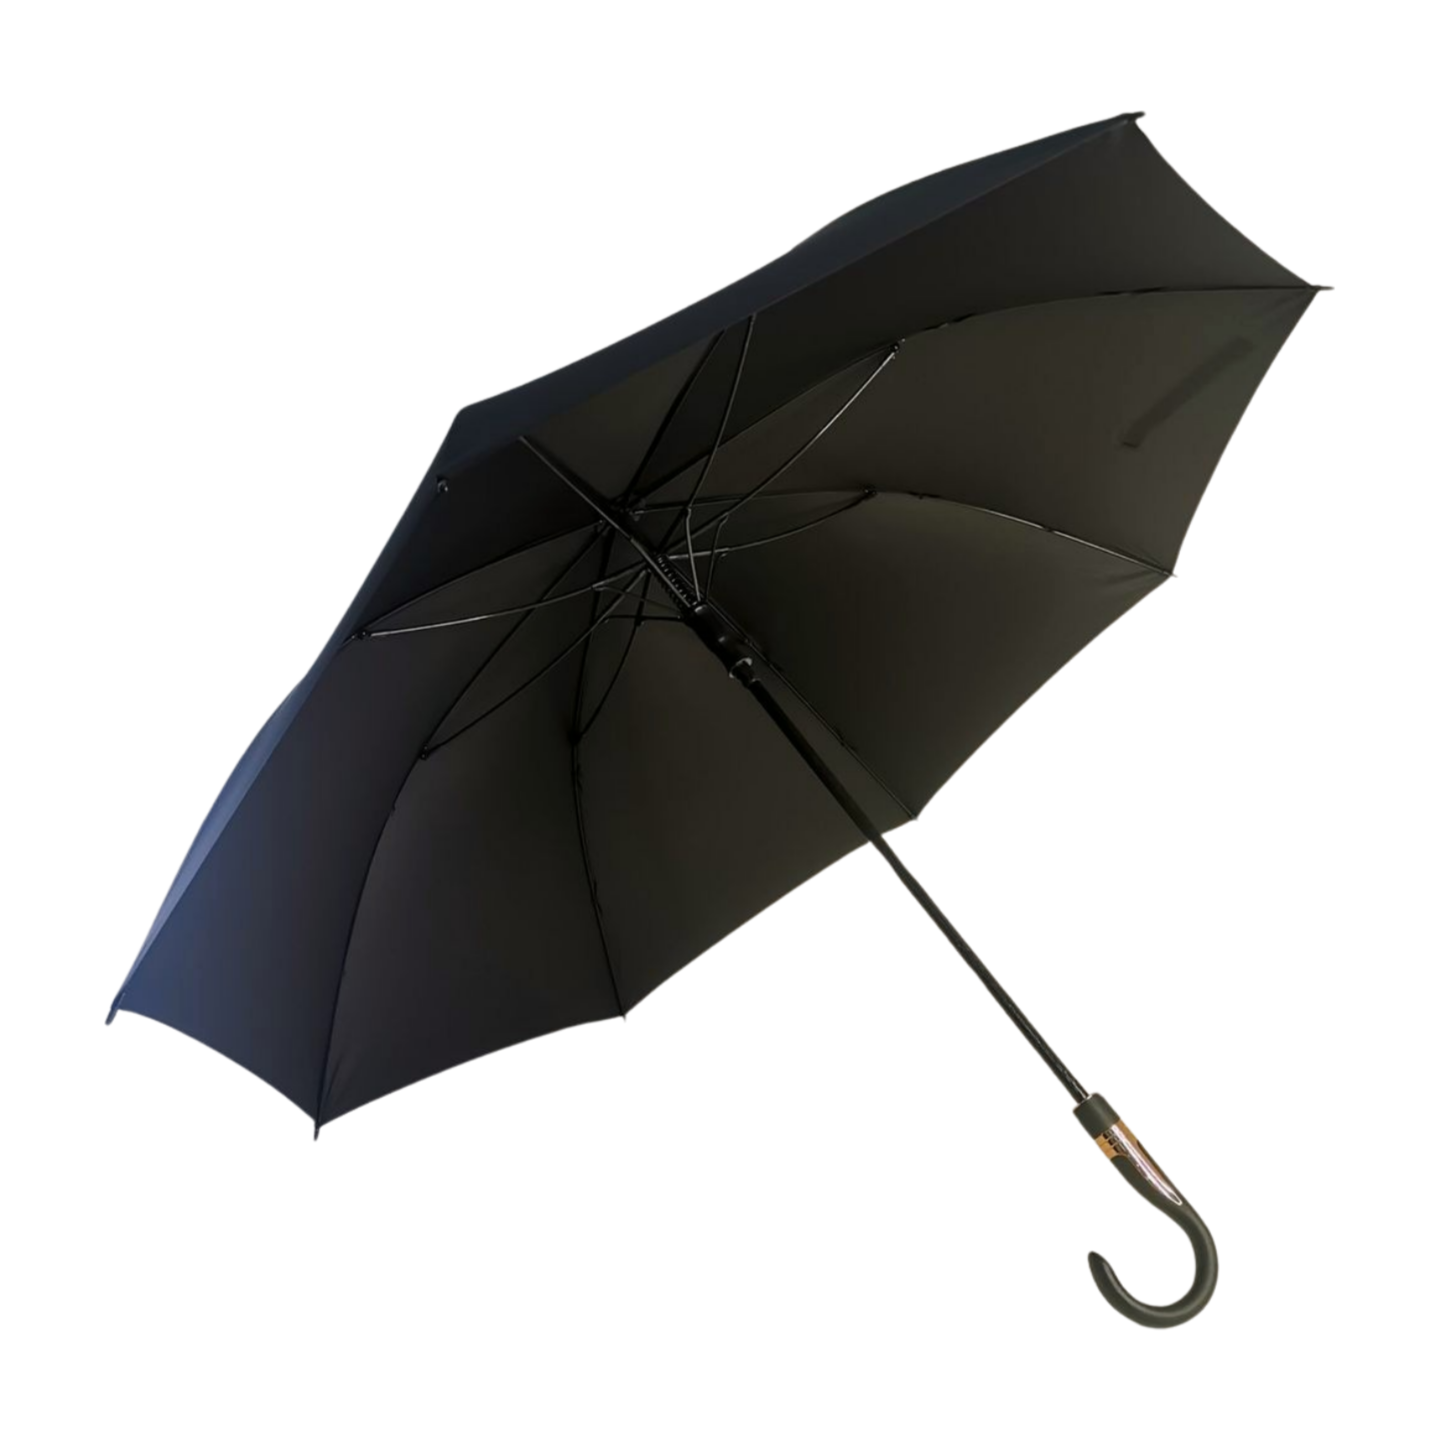 ttps://k913.goodo.net/60-golf-umbrel…business-style-product/